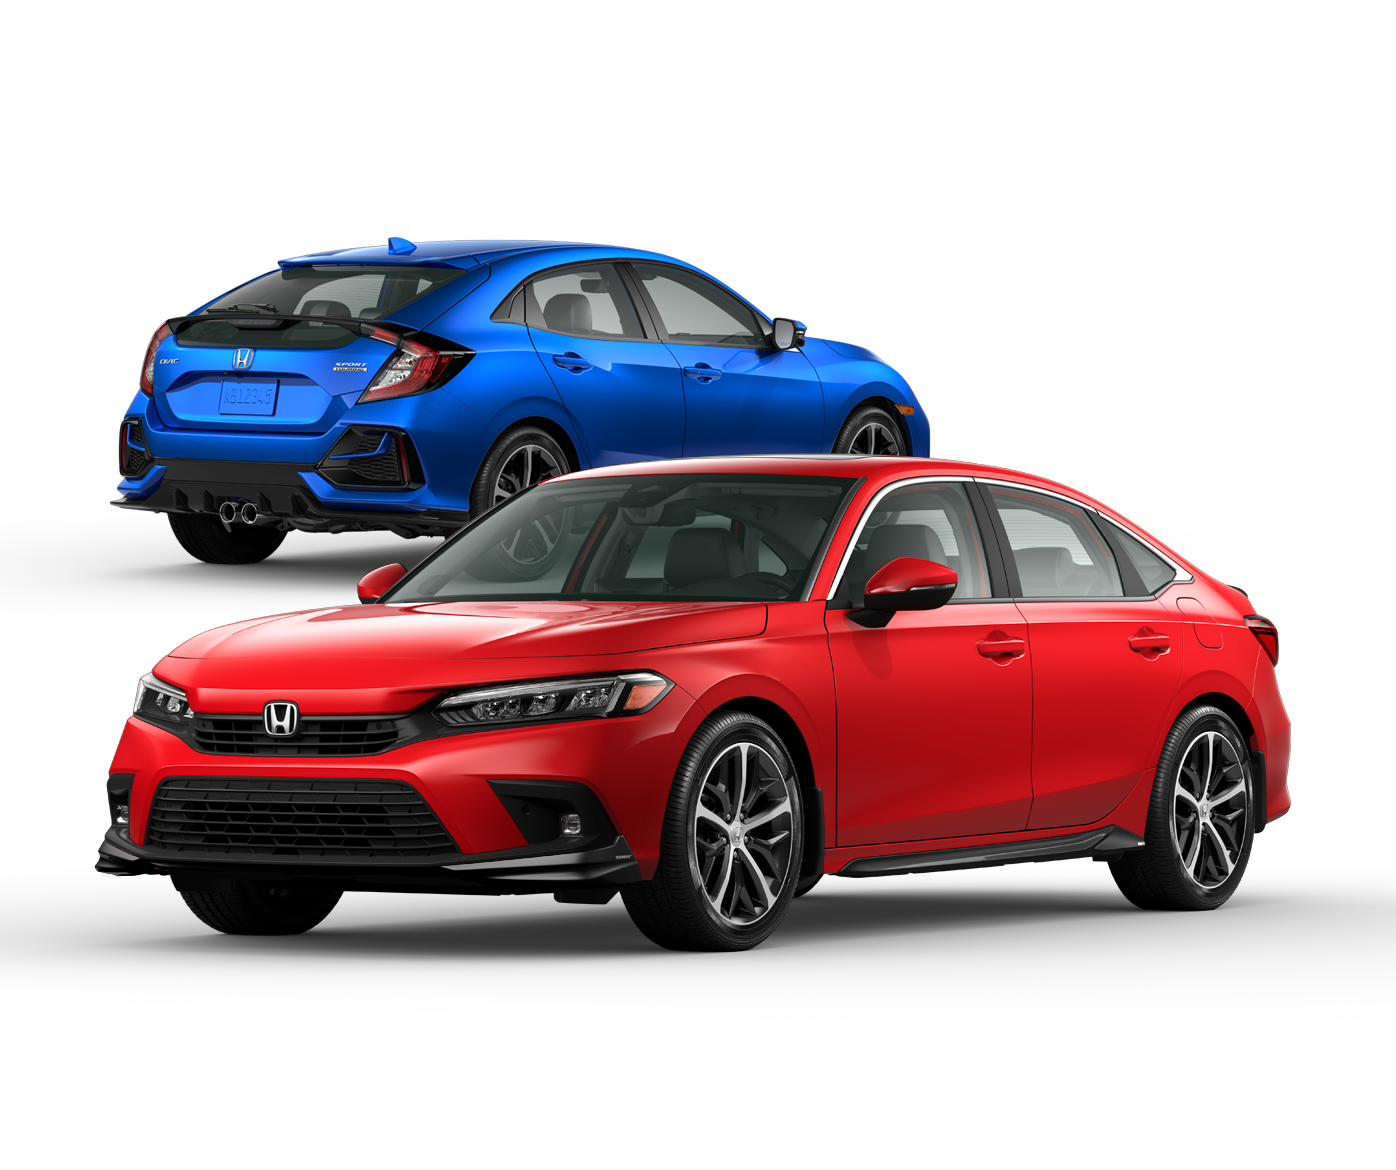 2020 Honda Civic Si Sedan in Aegean Blue Metallic and 2020 Honda Civic Si Coupe in Rallye Red